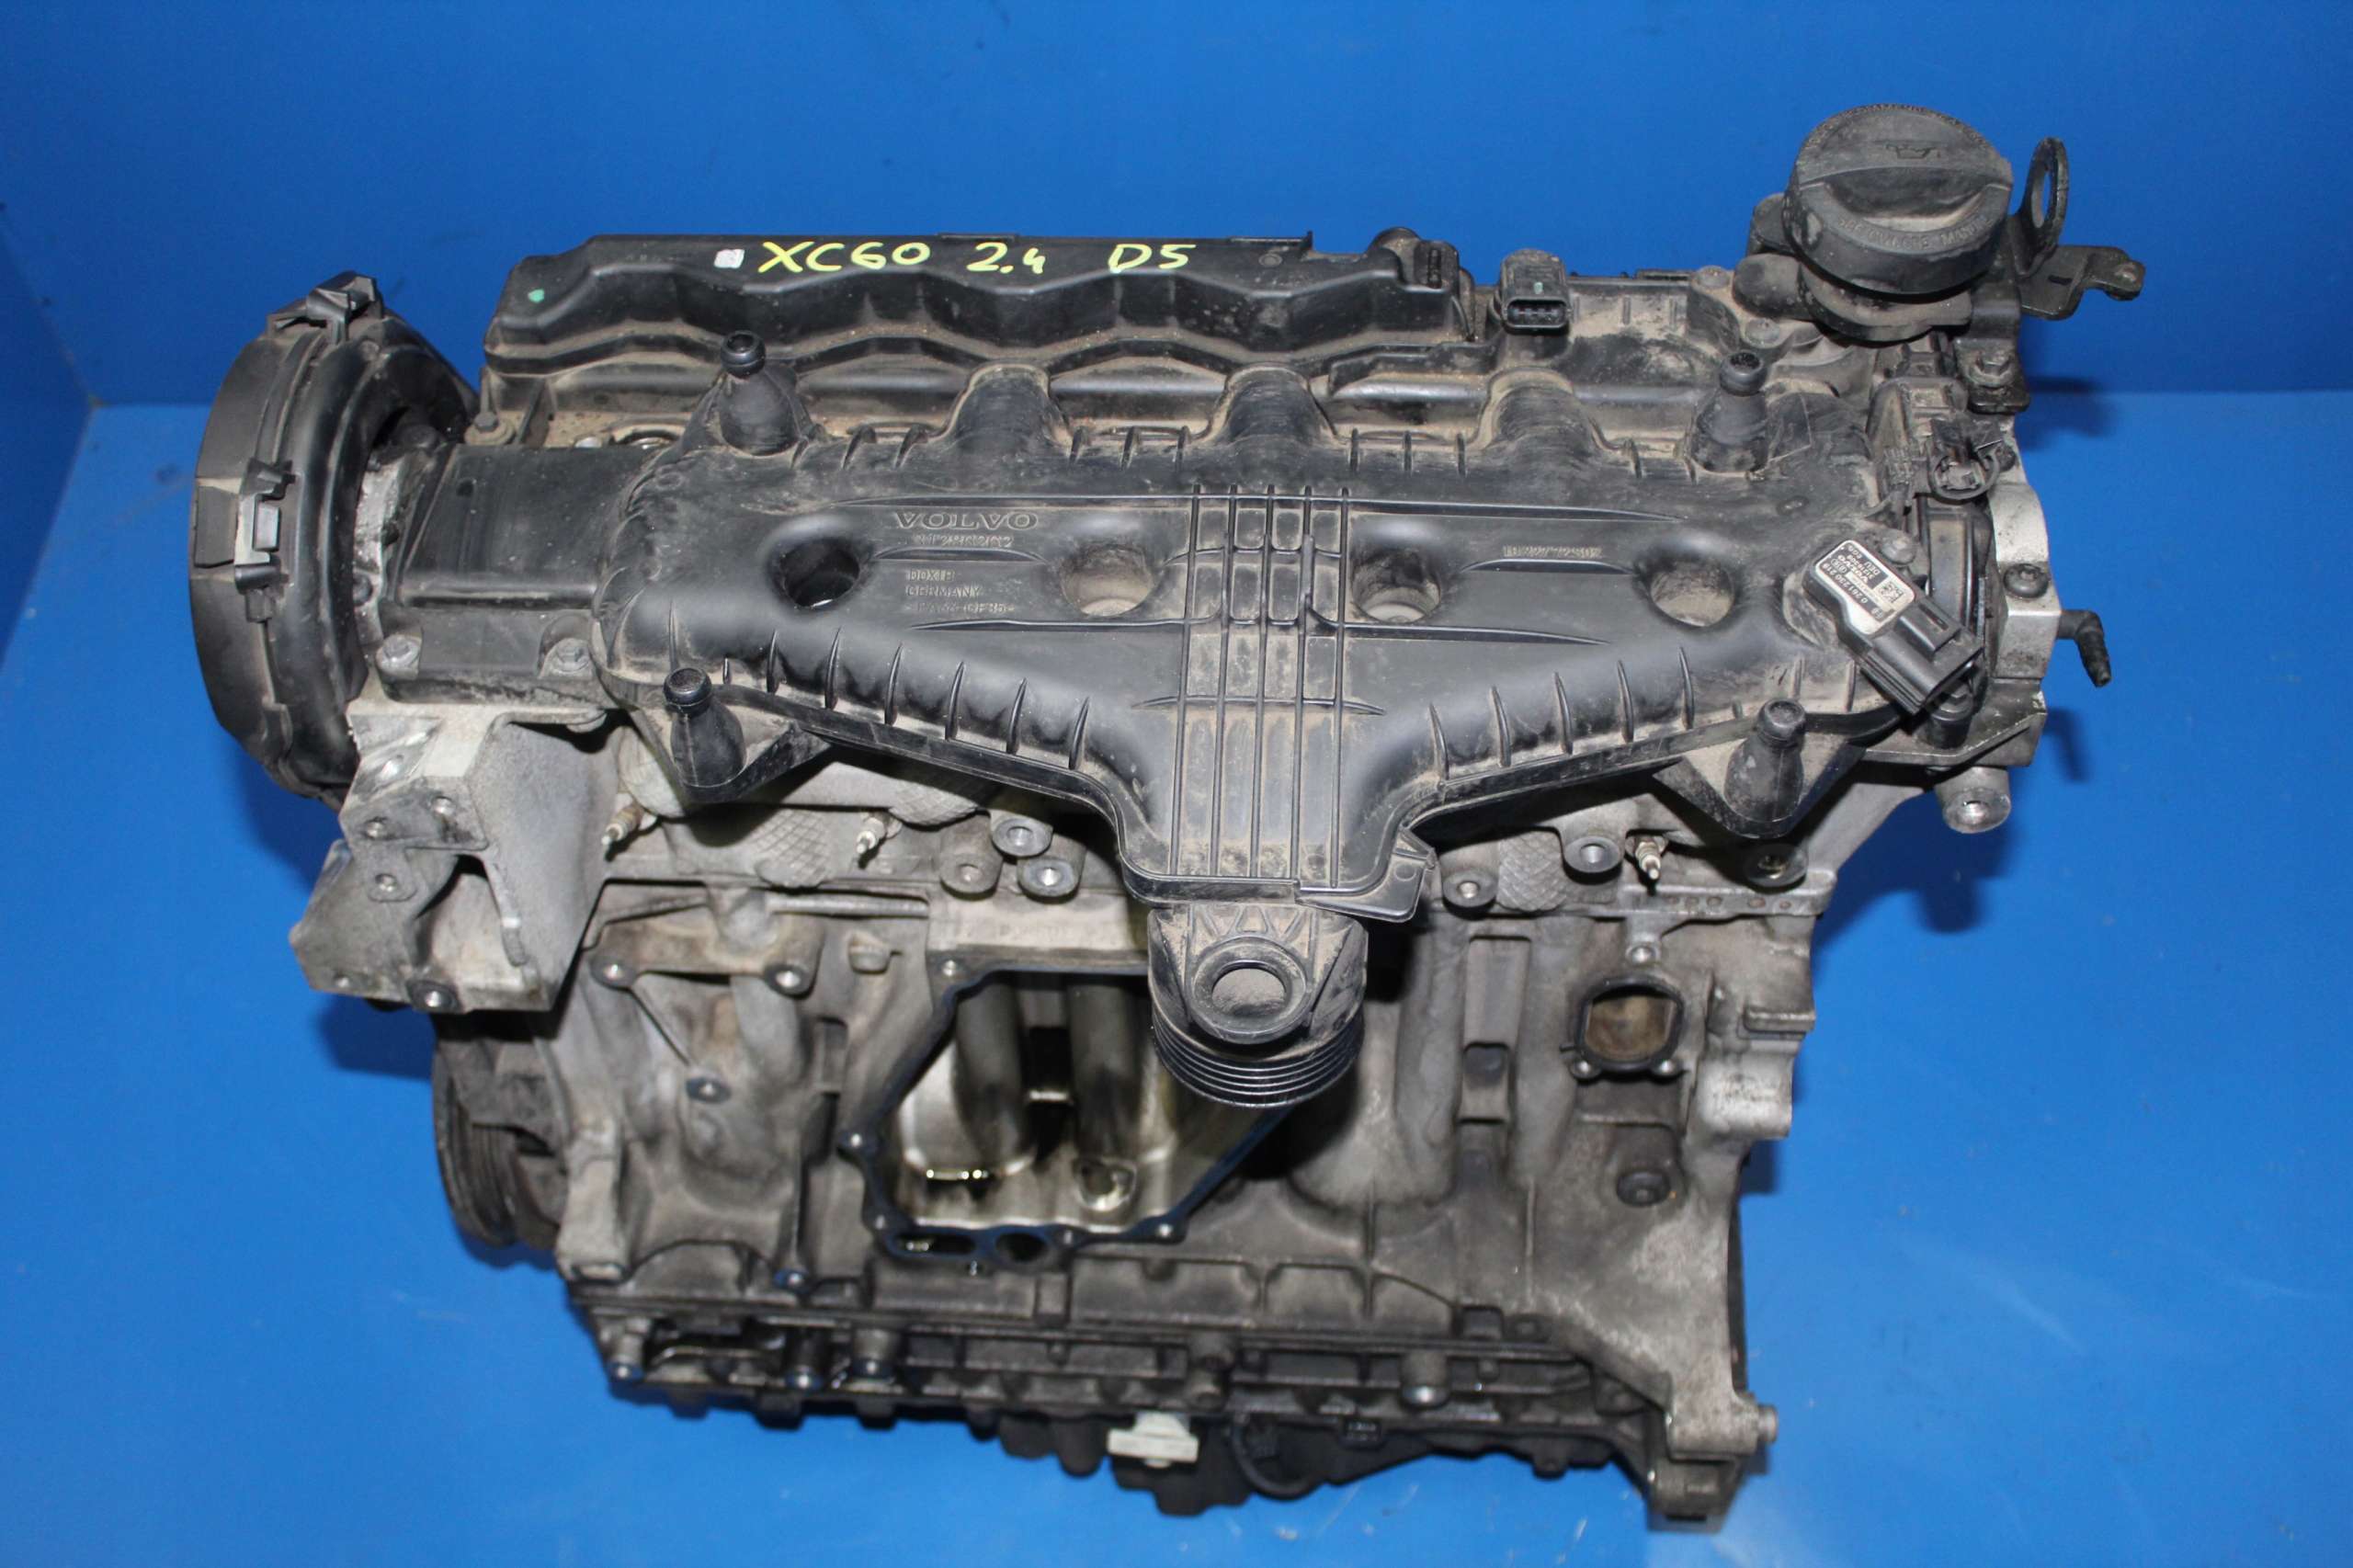 Volvo fh12 технические характеристики, двигатель и расход топлива, кабина